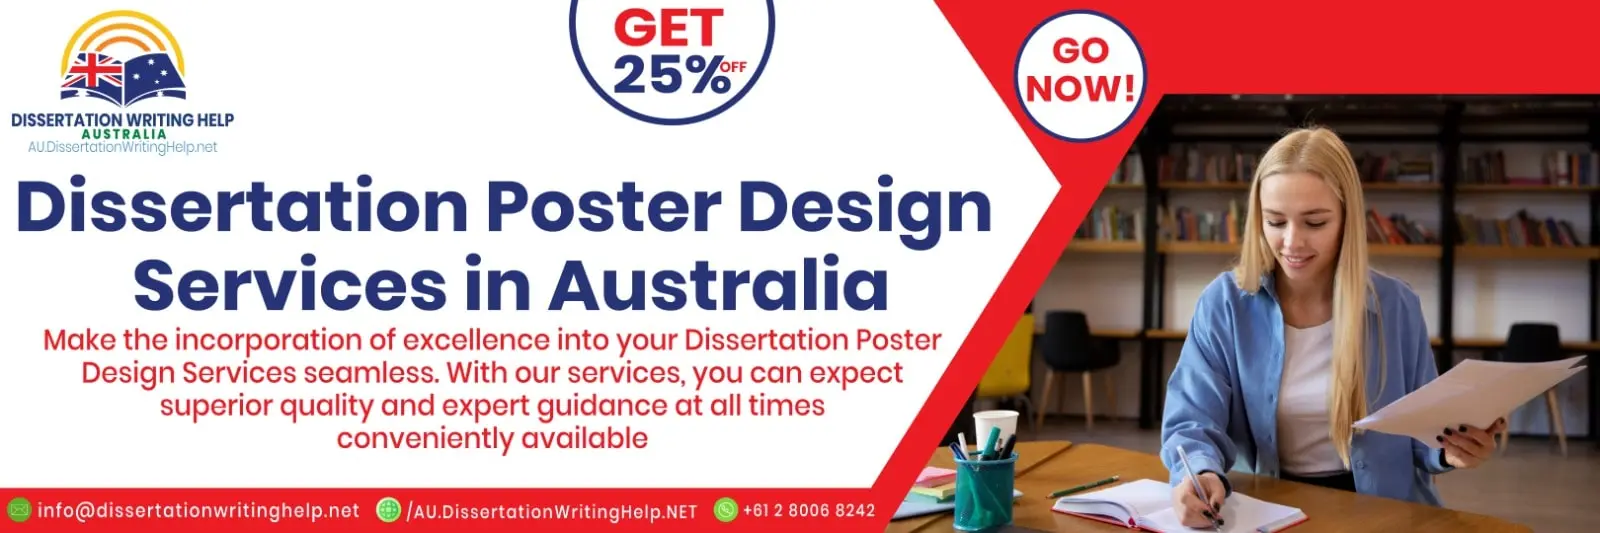 Dissertation Poster Design Services